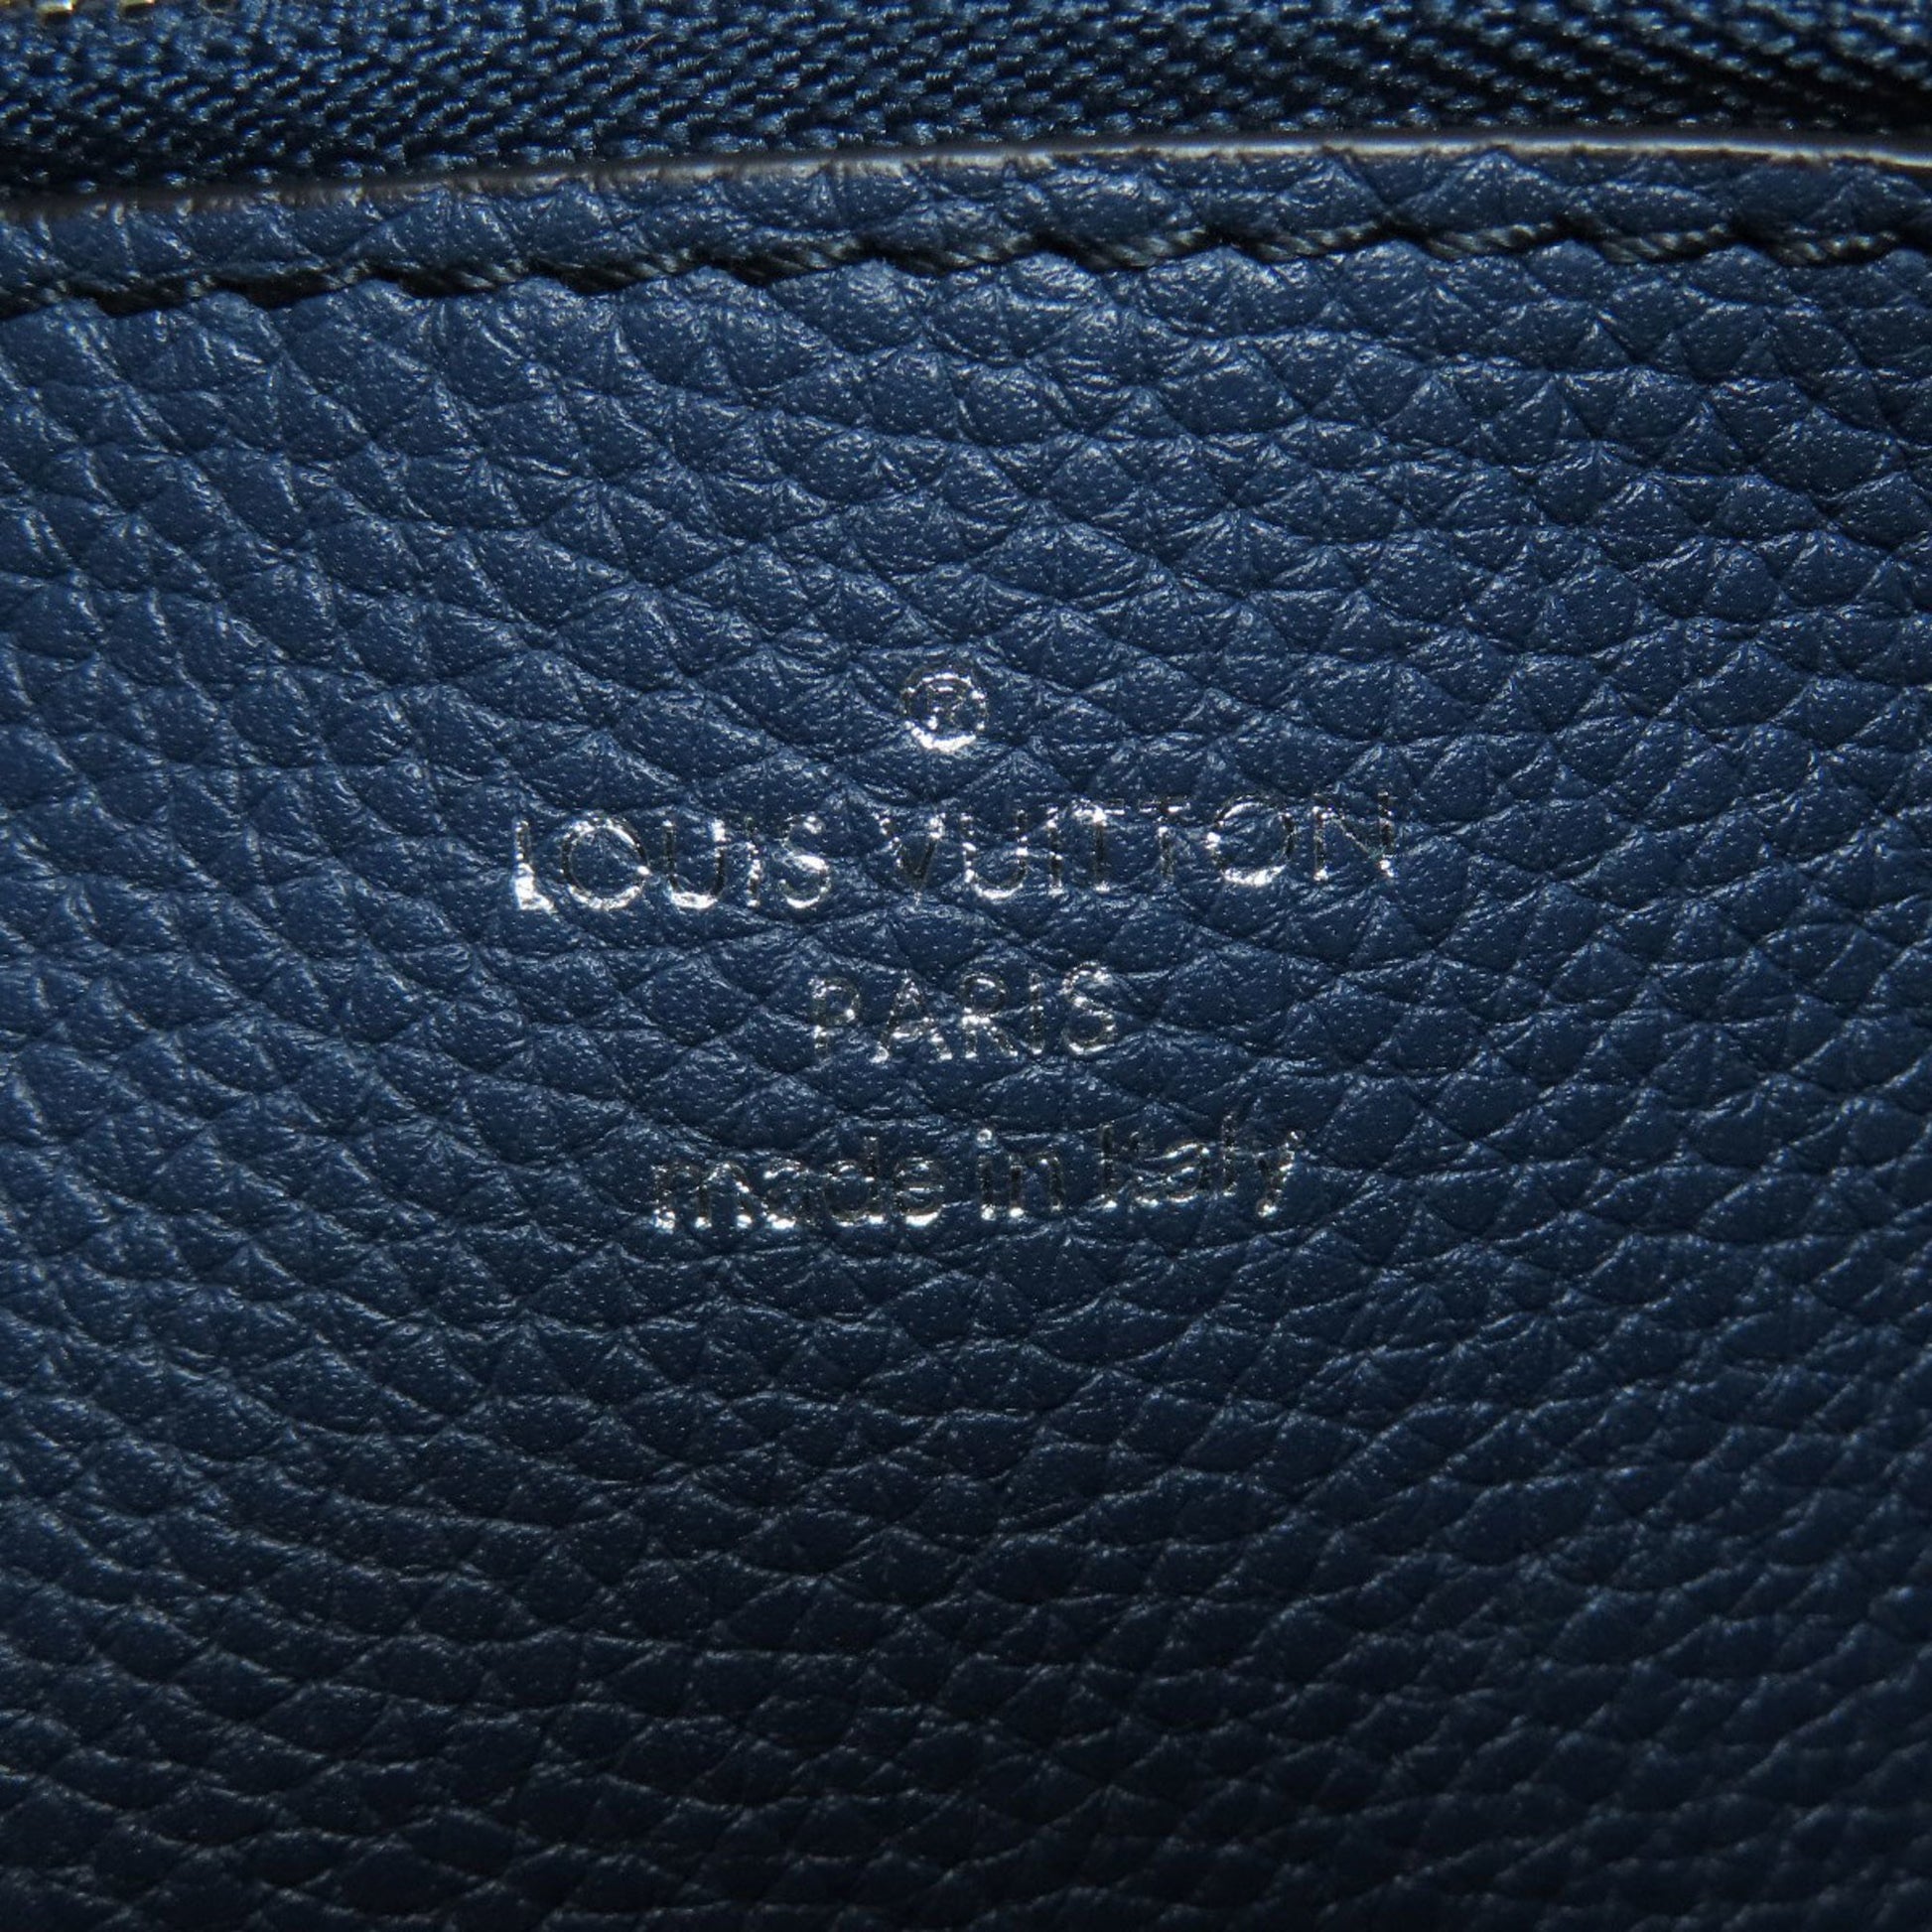 Louis Vuitton Mulia Flight Mode Mahina Shoulder Bag M59554 White